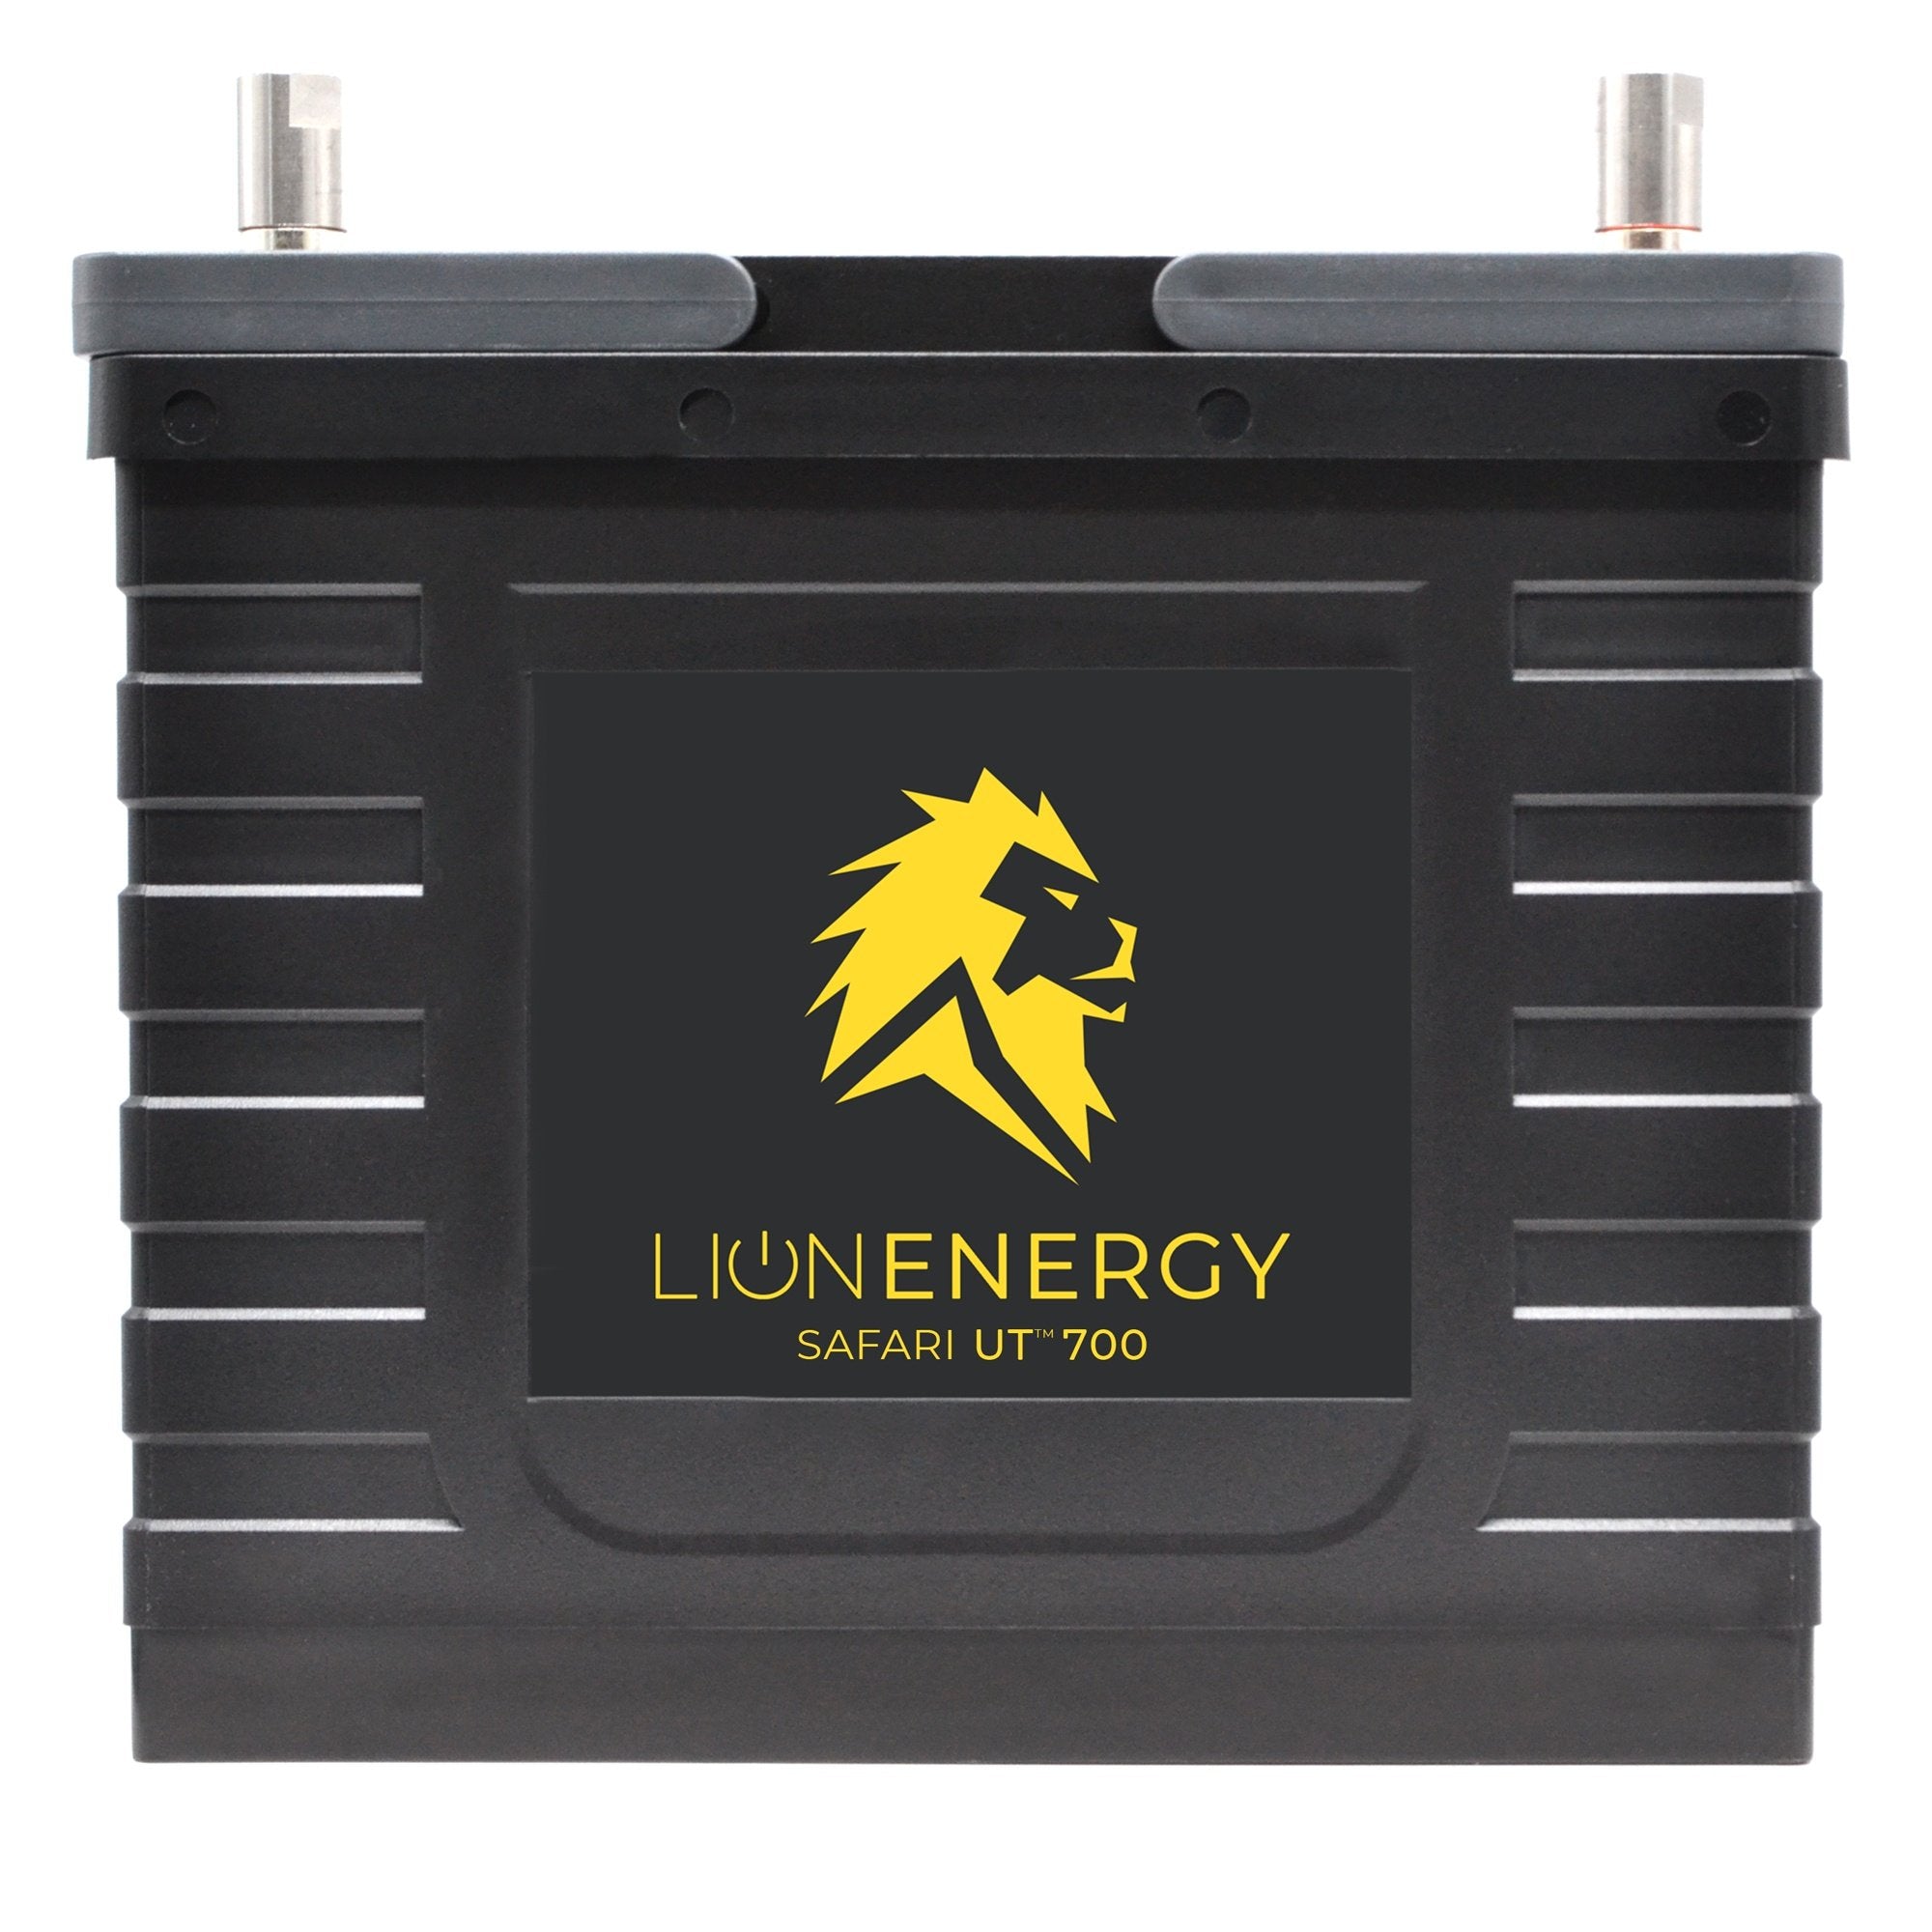 Lion Energy Safari UT 700 Lithium Battery